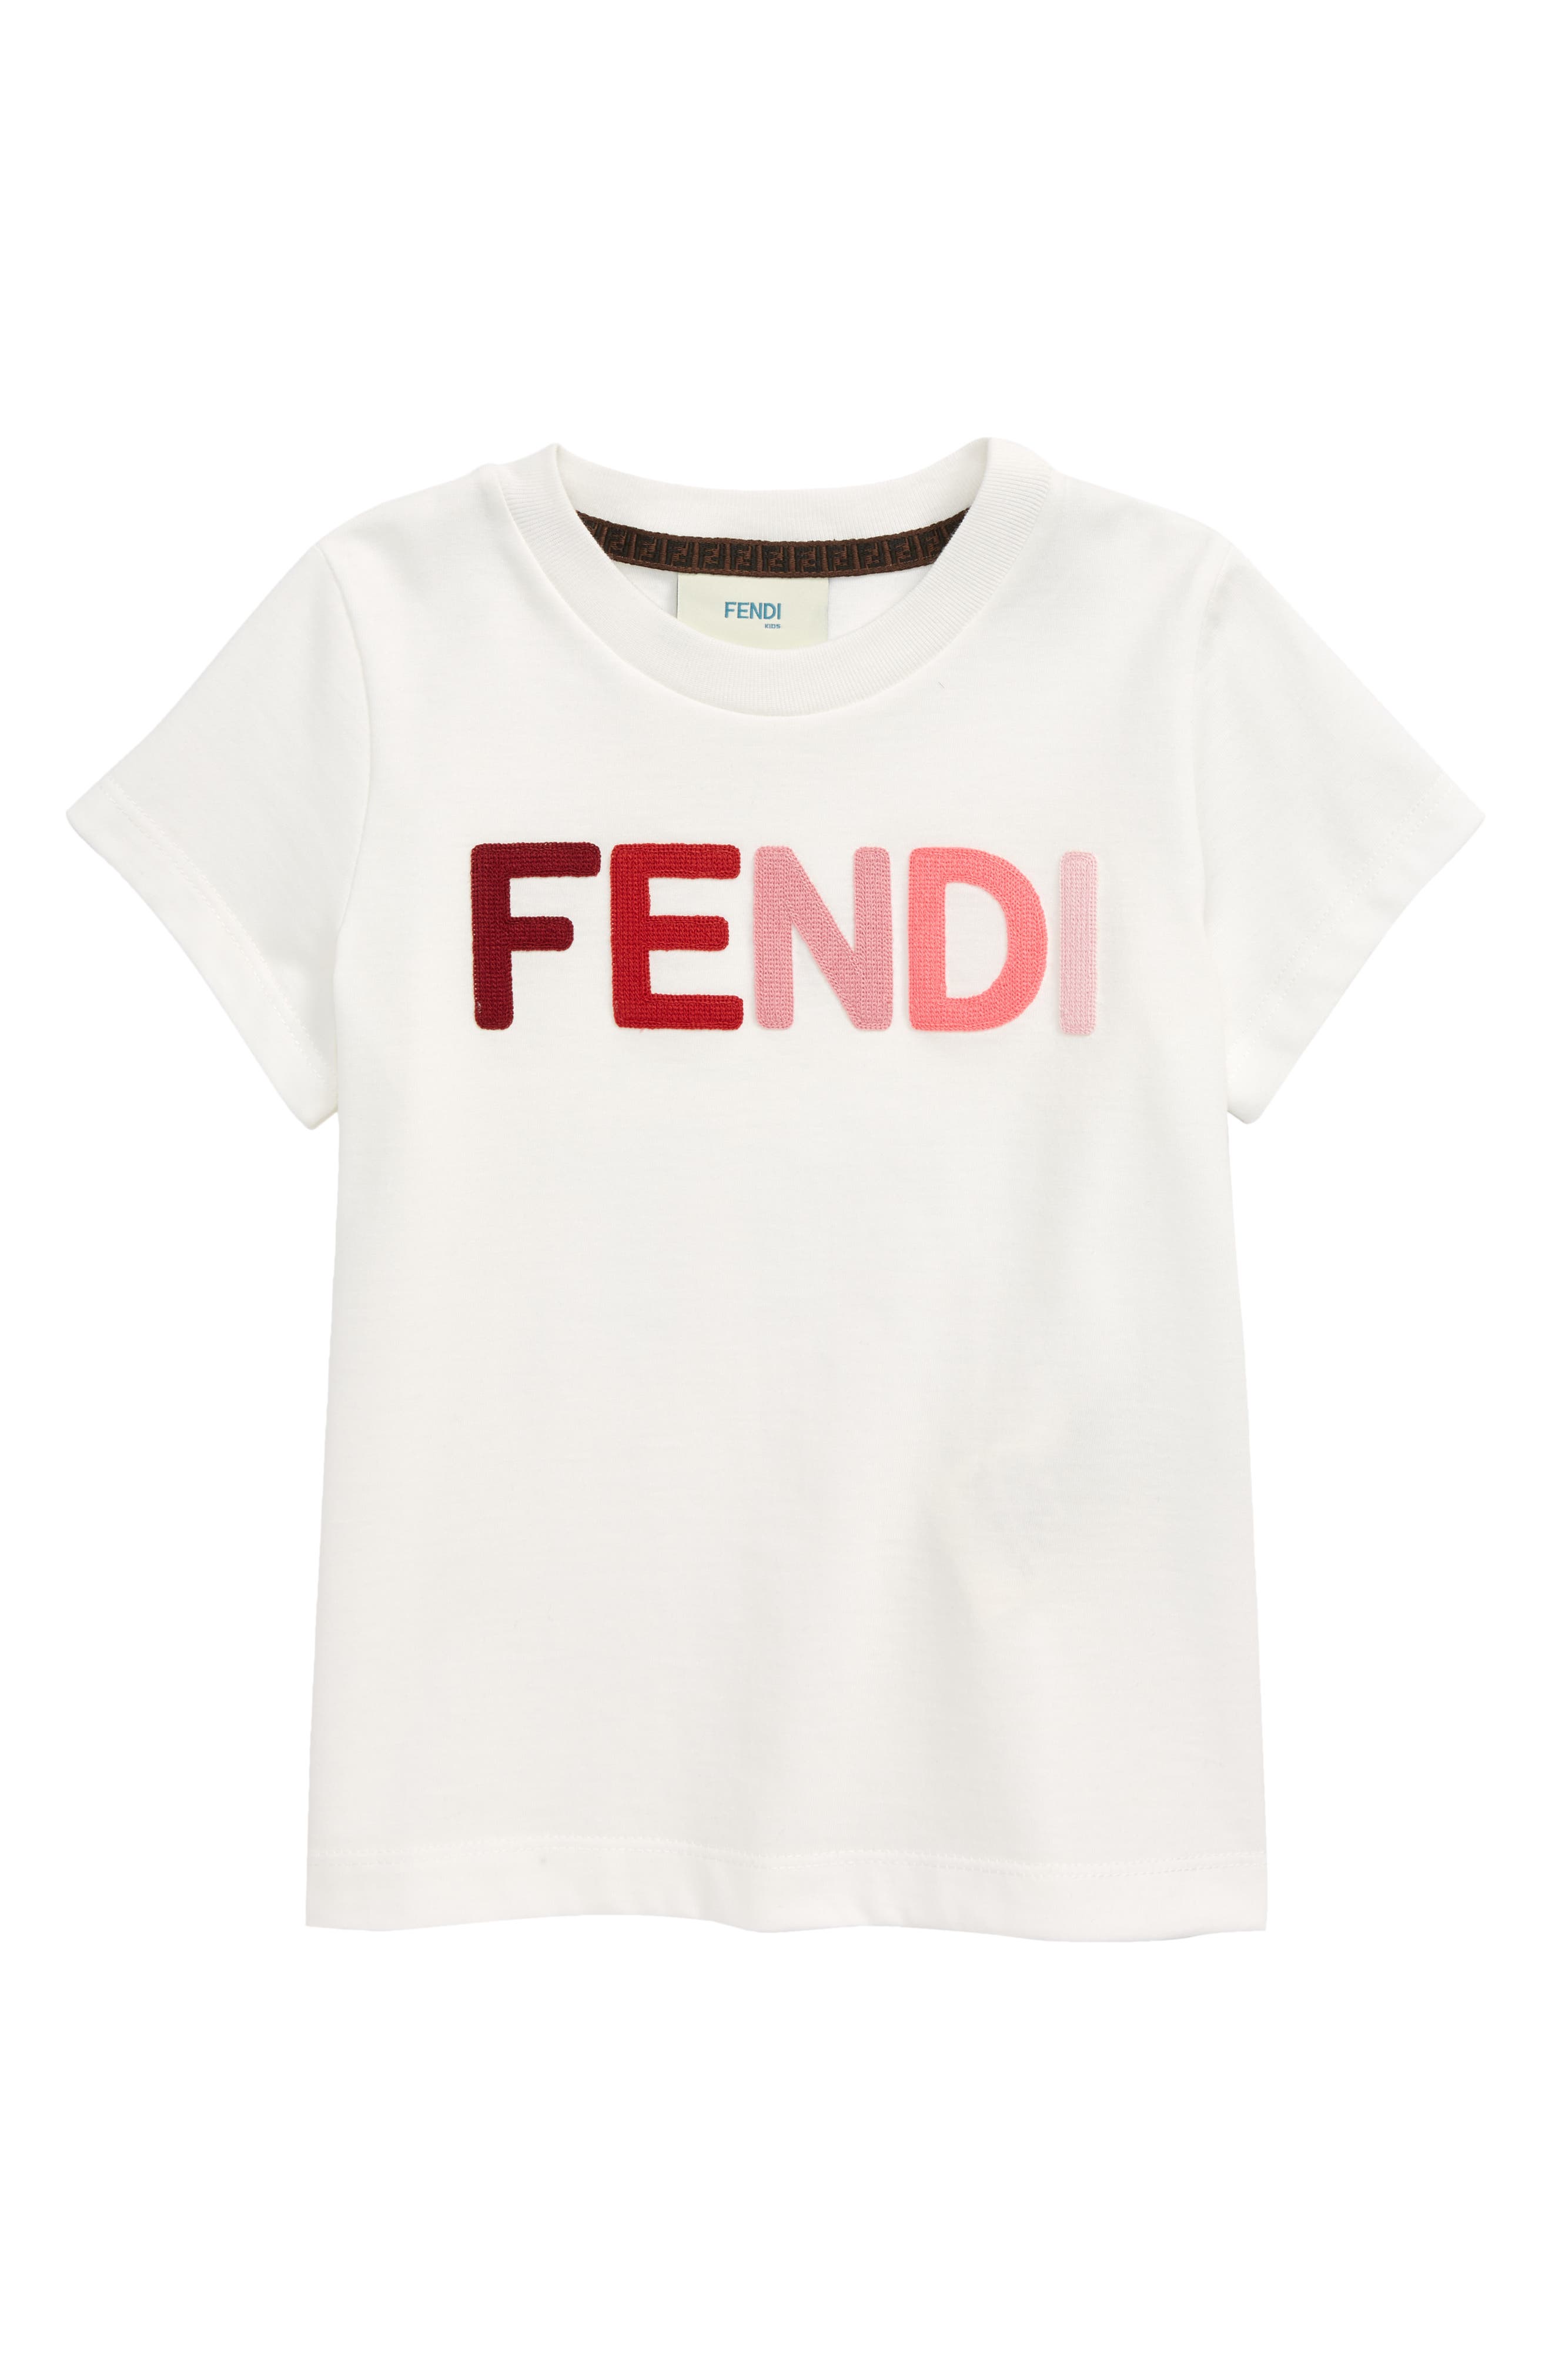 fendi toddler girl clothes